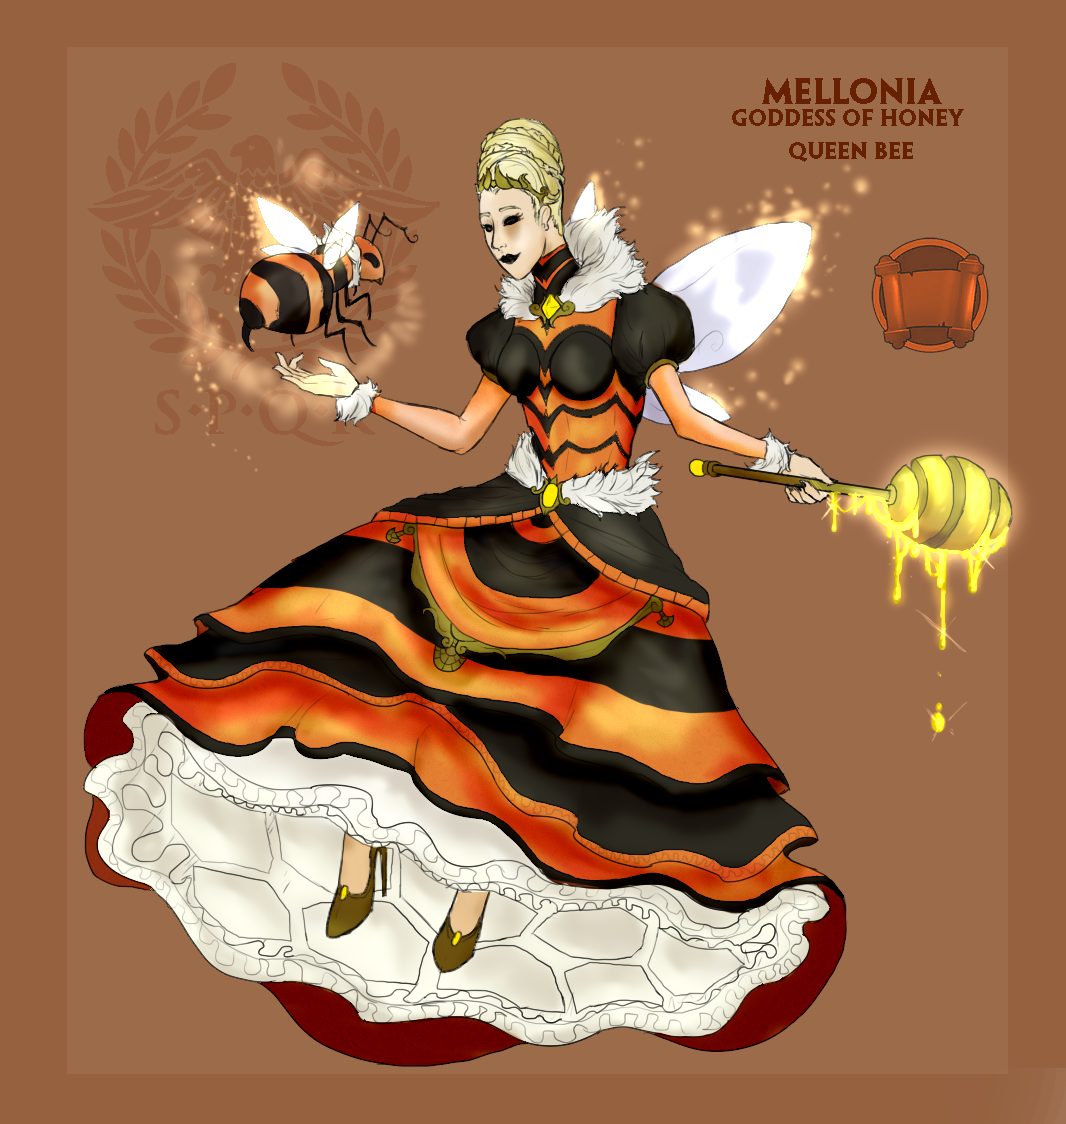 Honey goddess MELISSEUS